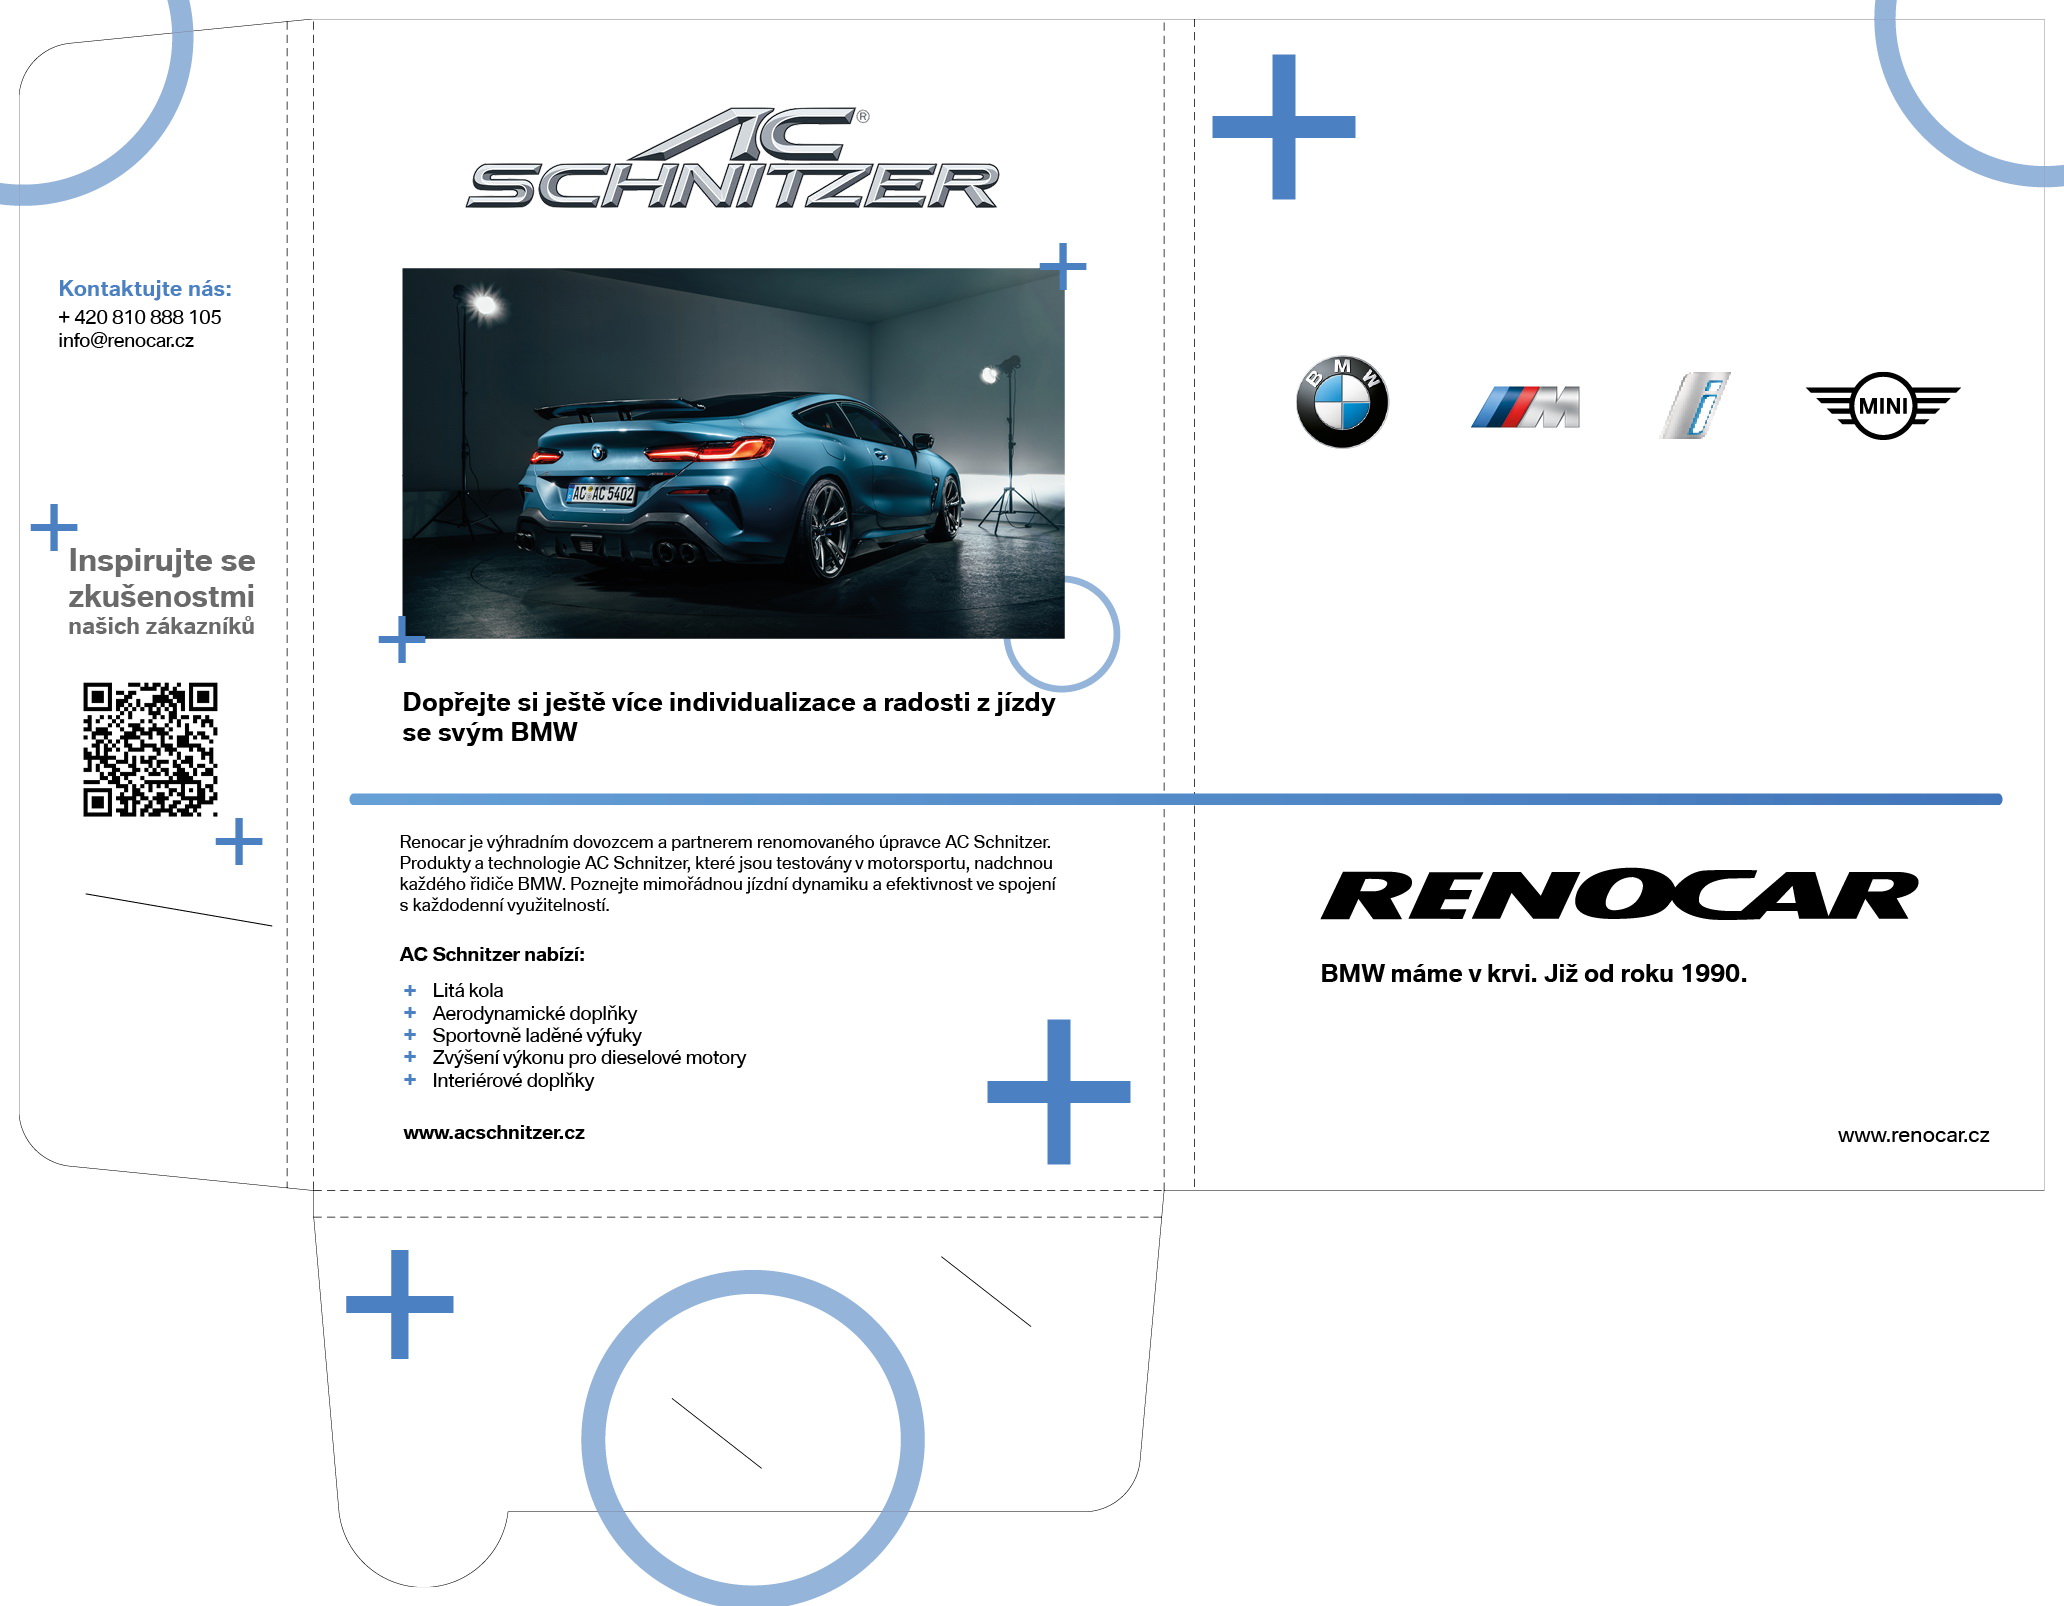 BMW Group digital info card